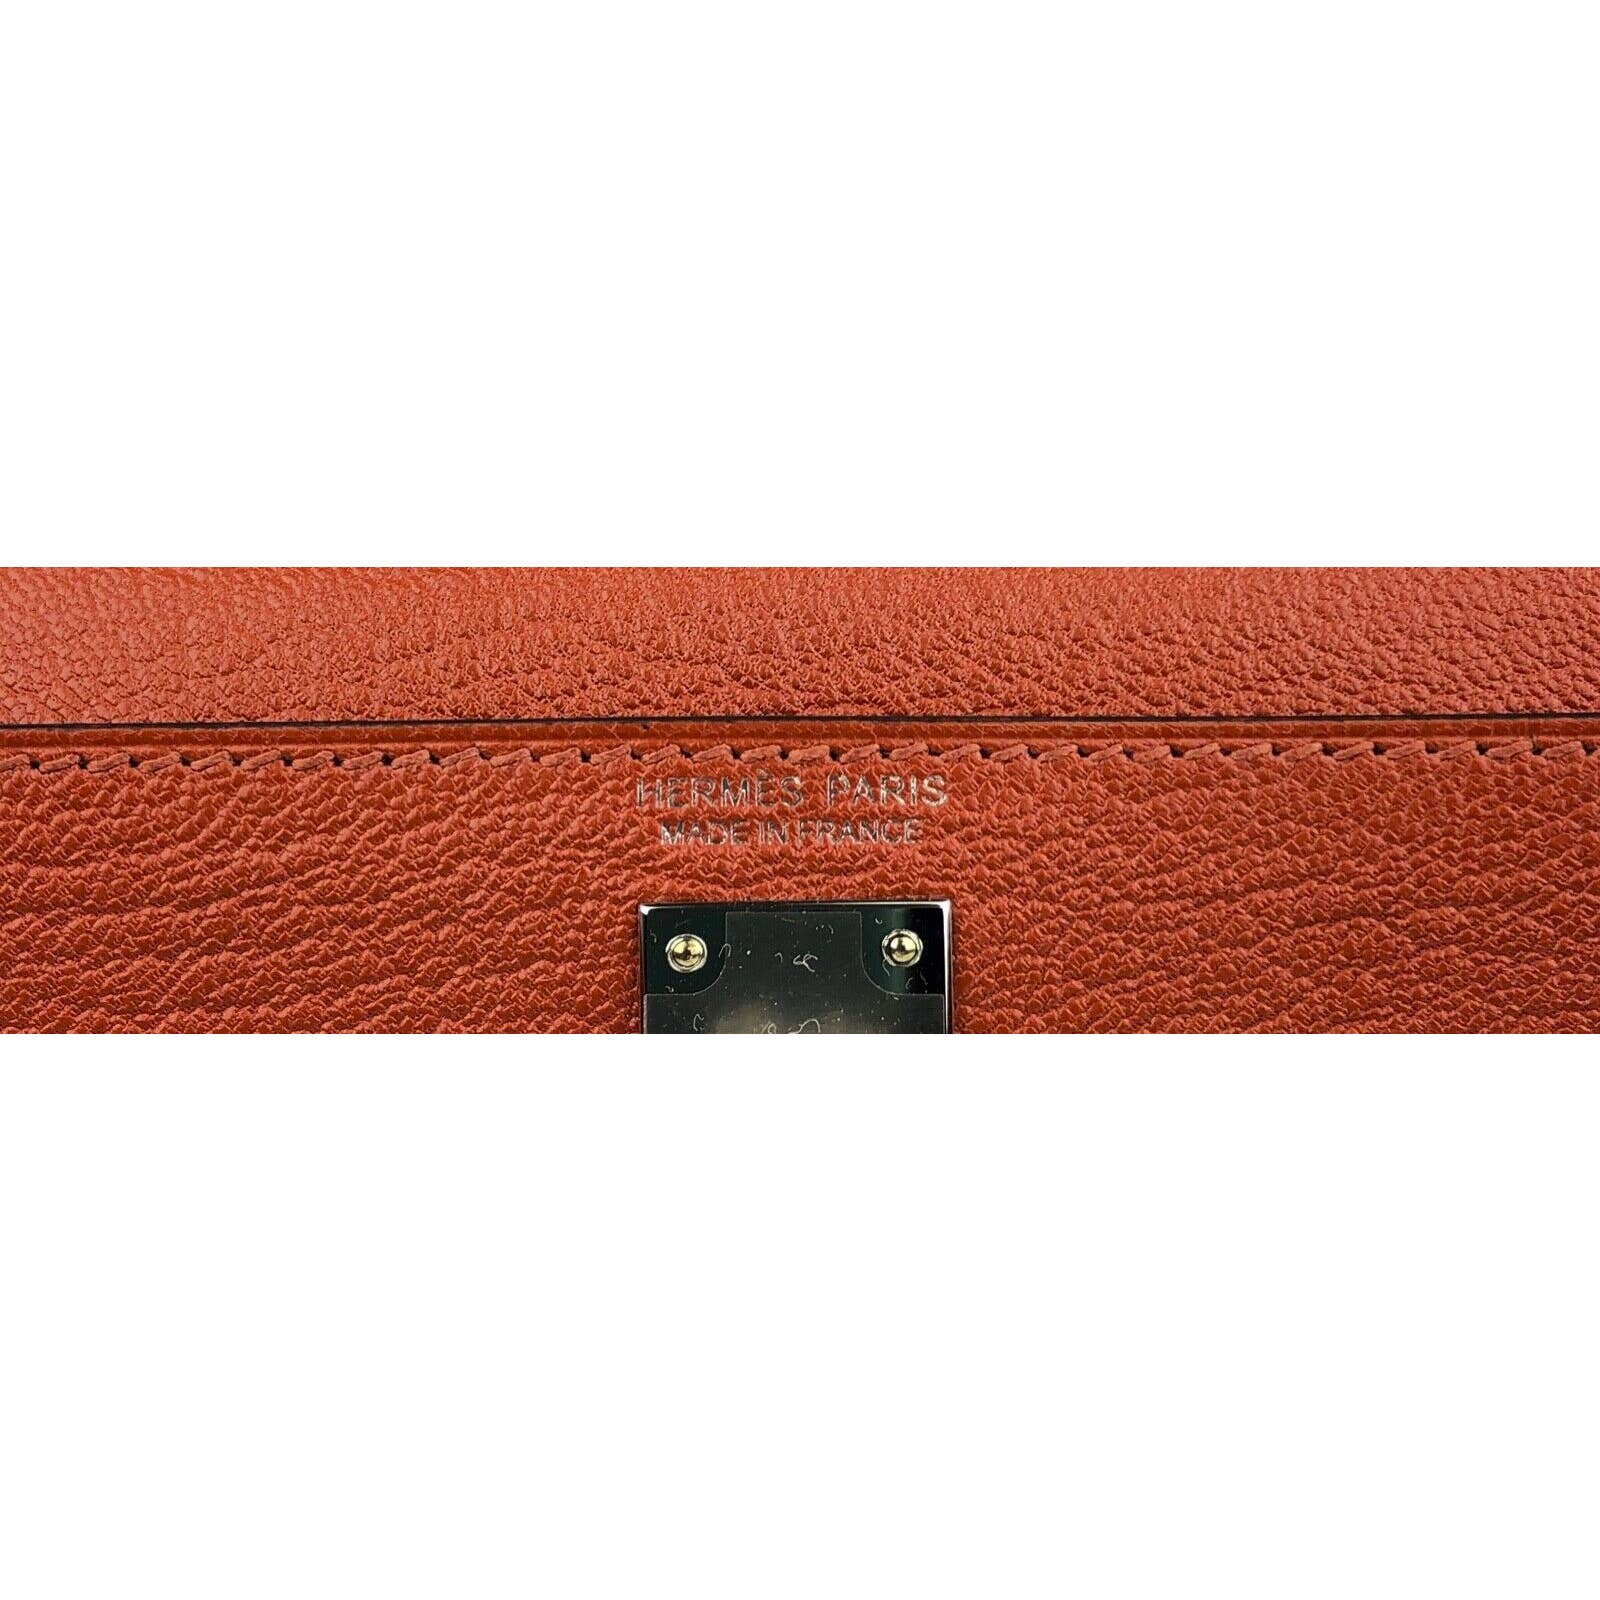 Hermes Kelly Handbag Cuivre Togo with Palladium Hardware 28 Red